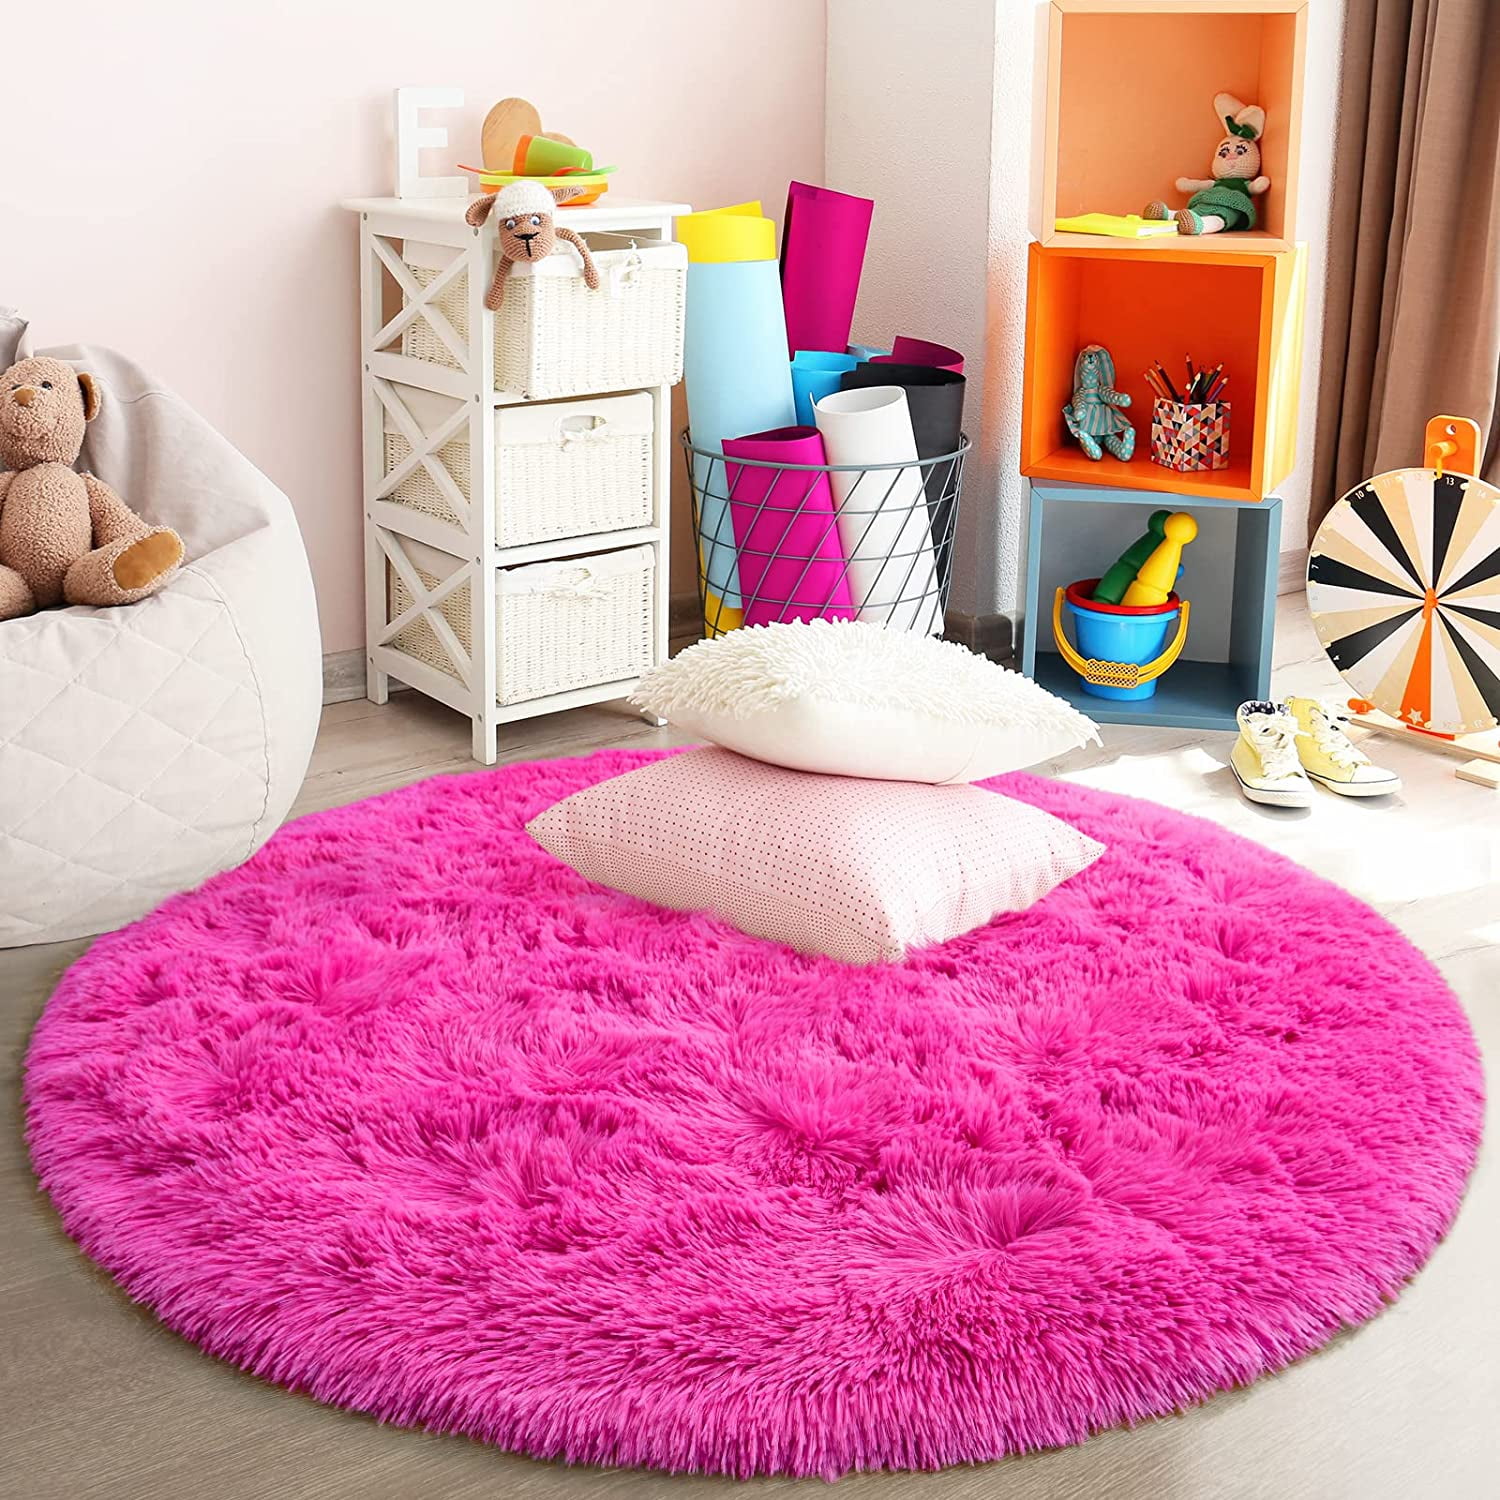 junovo Pink Round Rug 4x4 Feet Fluffy Soft Area Rugs for Kids Girls Room  Princess Castle Plush Shaggy Carpet Cute Circle Nursery Rug for Girls  Bedroom